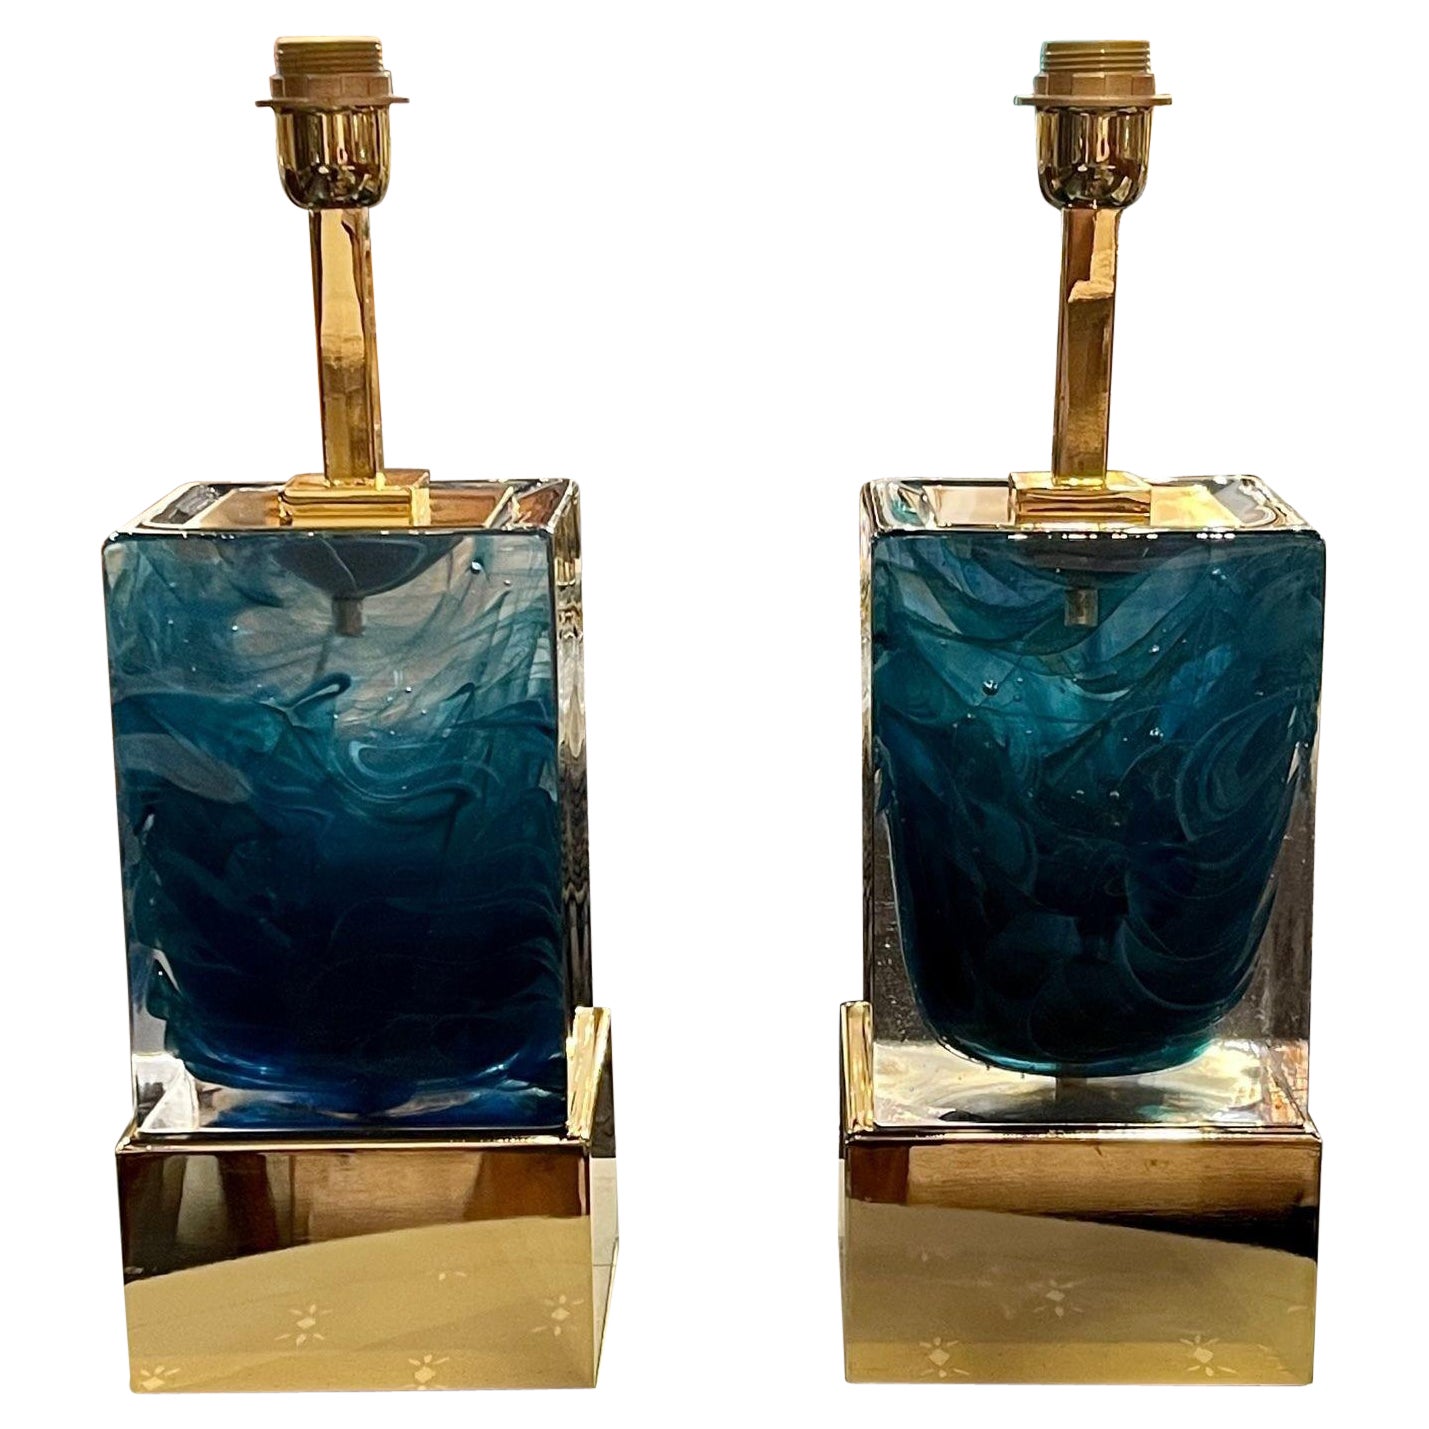 Modern Turquoise Murano Glass Block Lamps